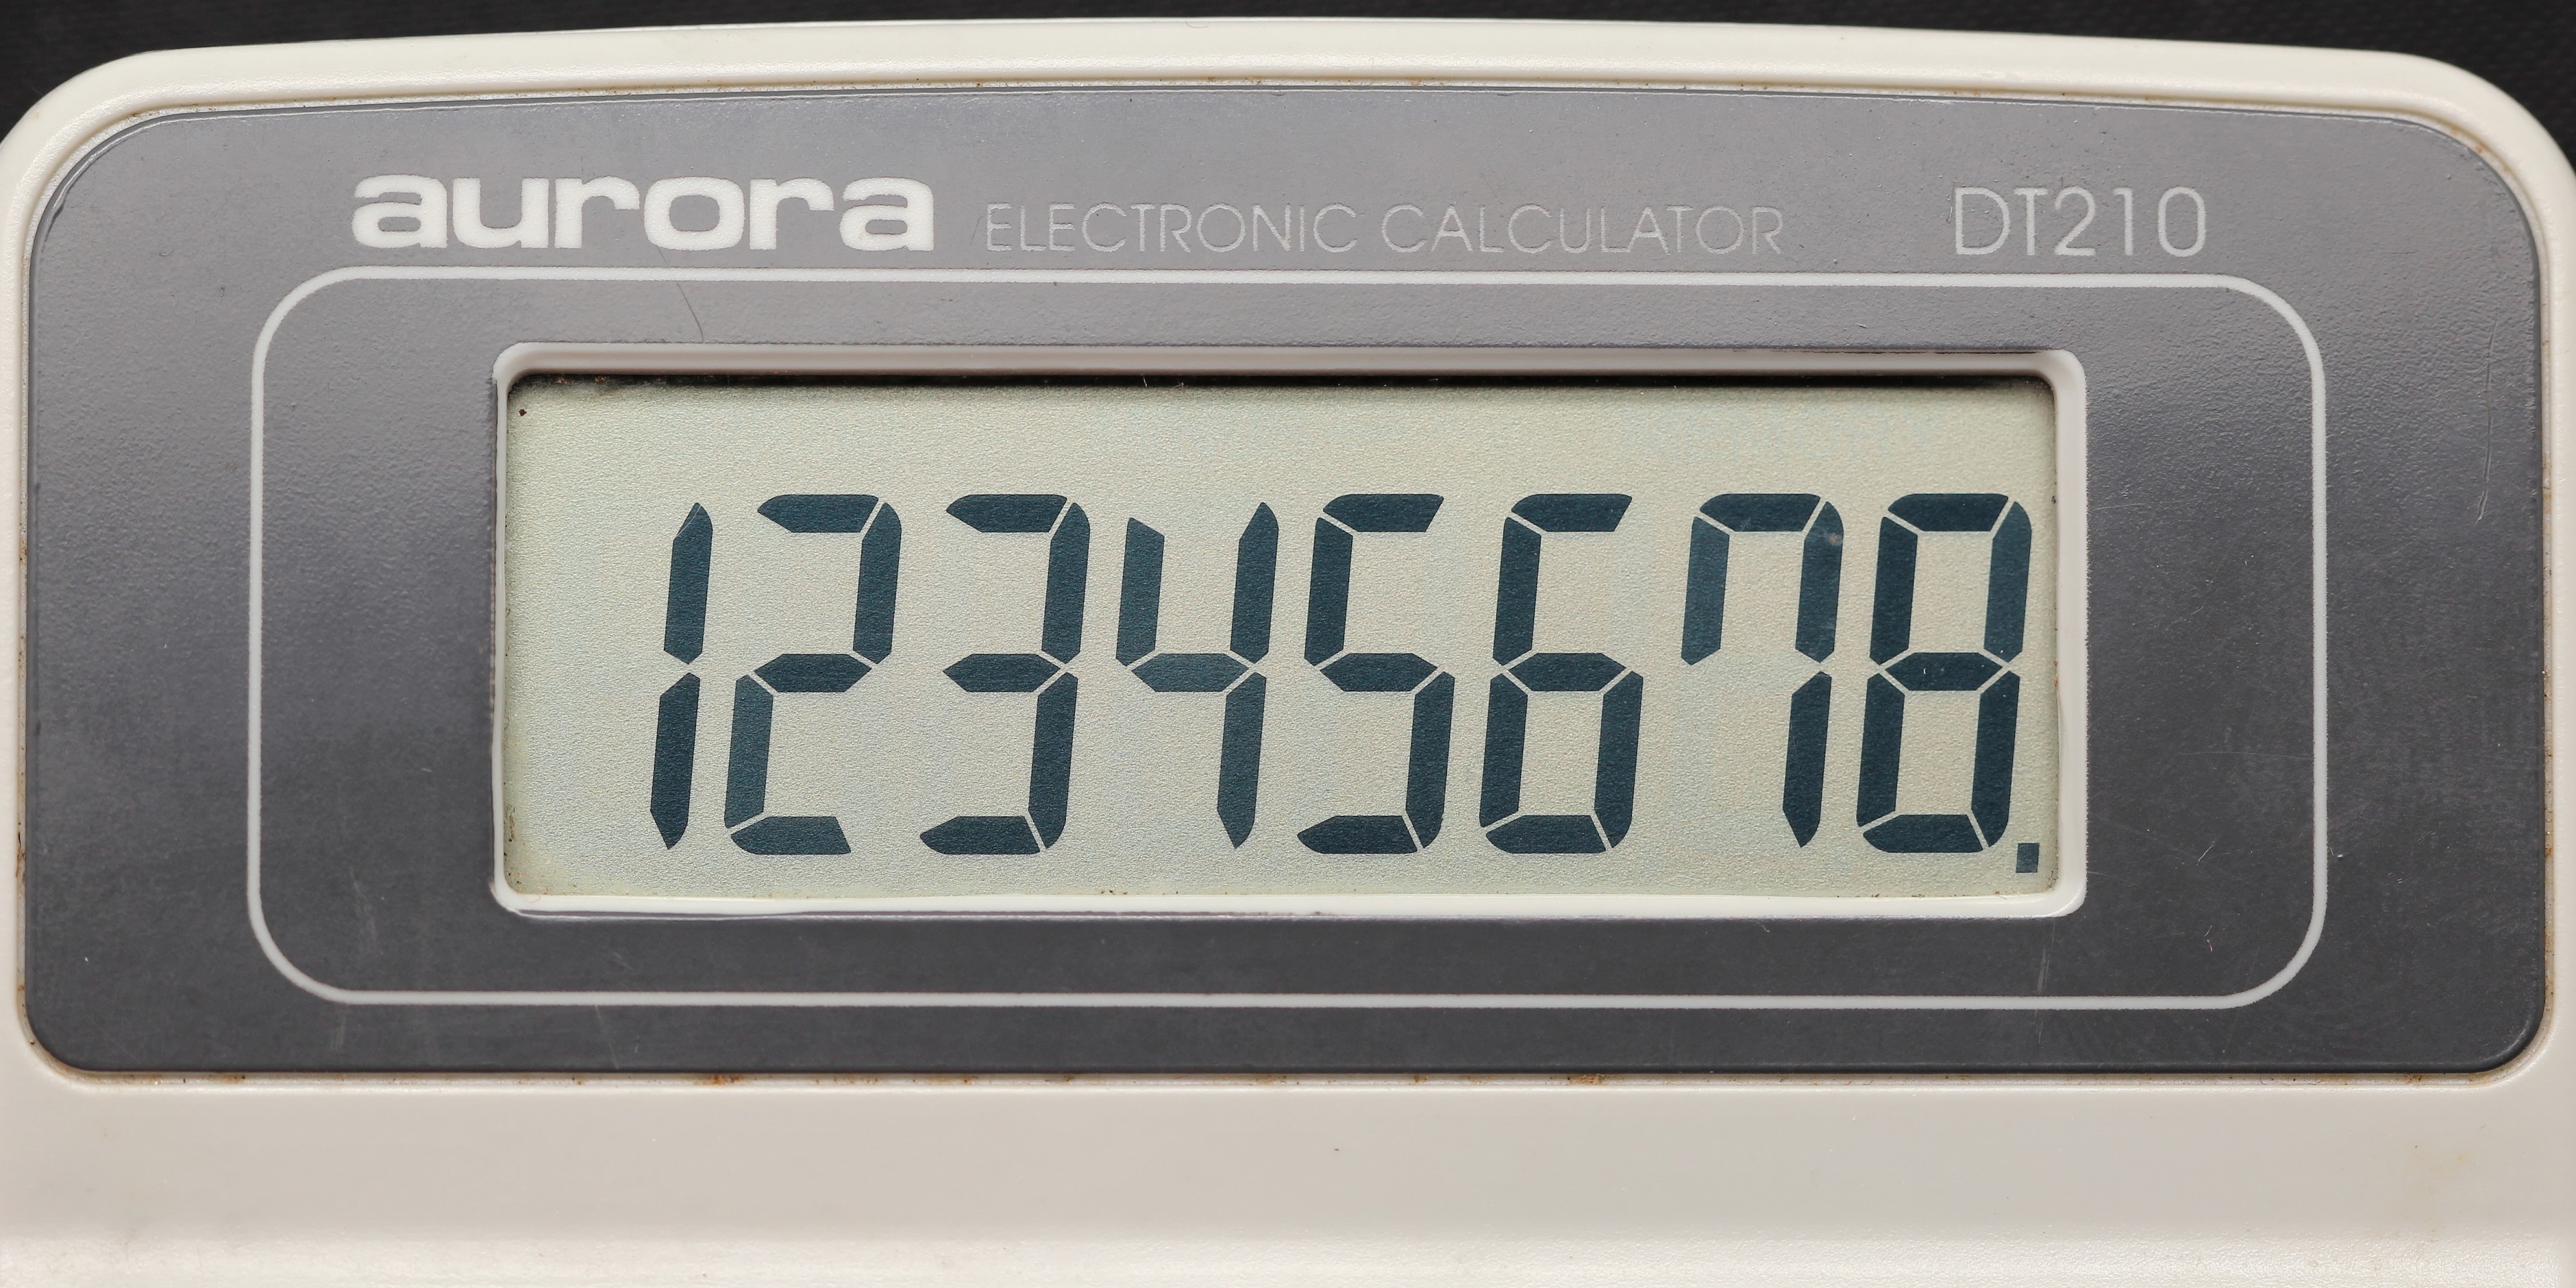 Aurora electronic calculator DT210 10